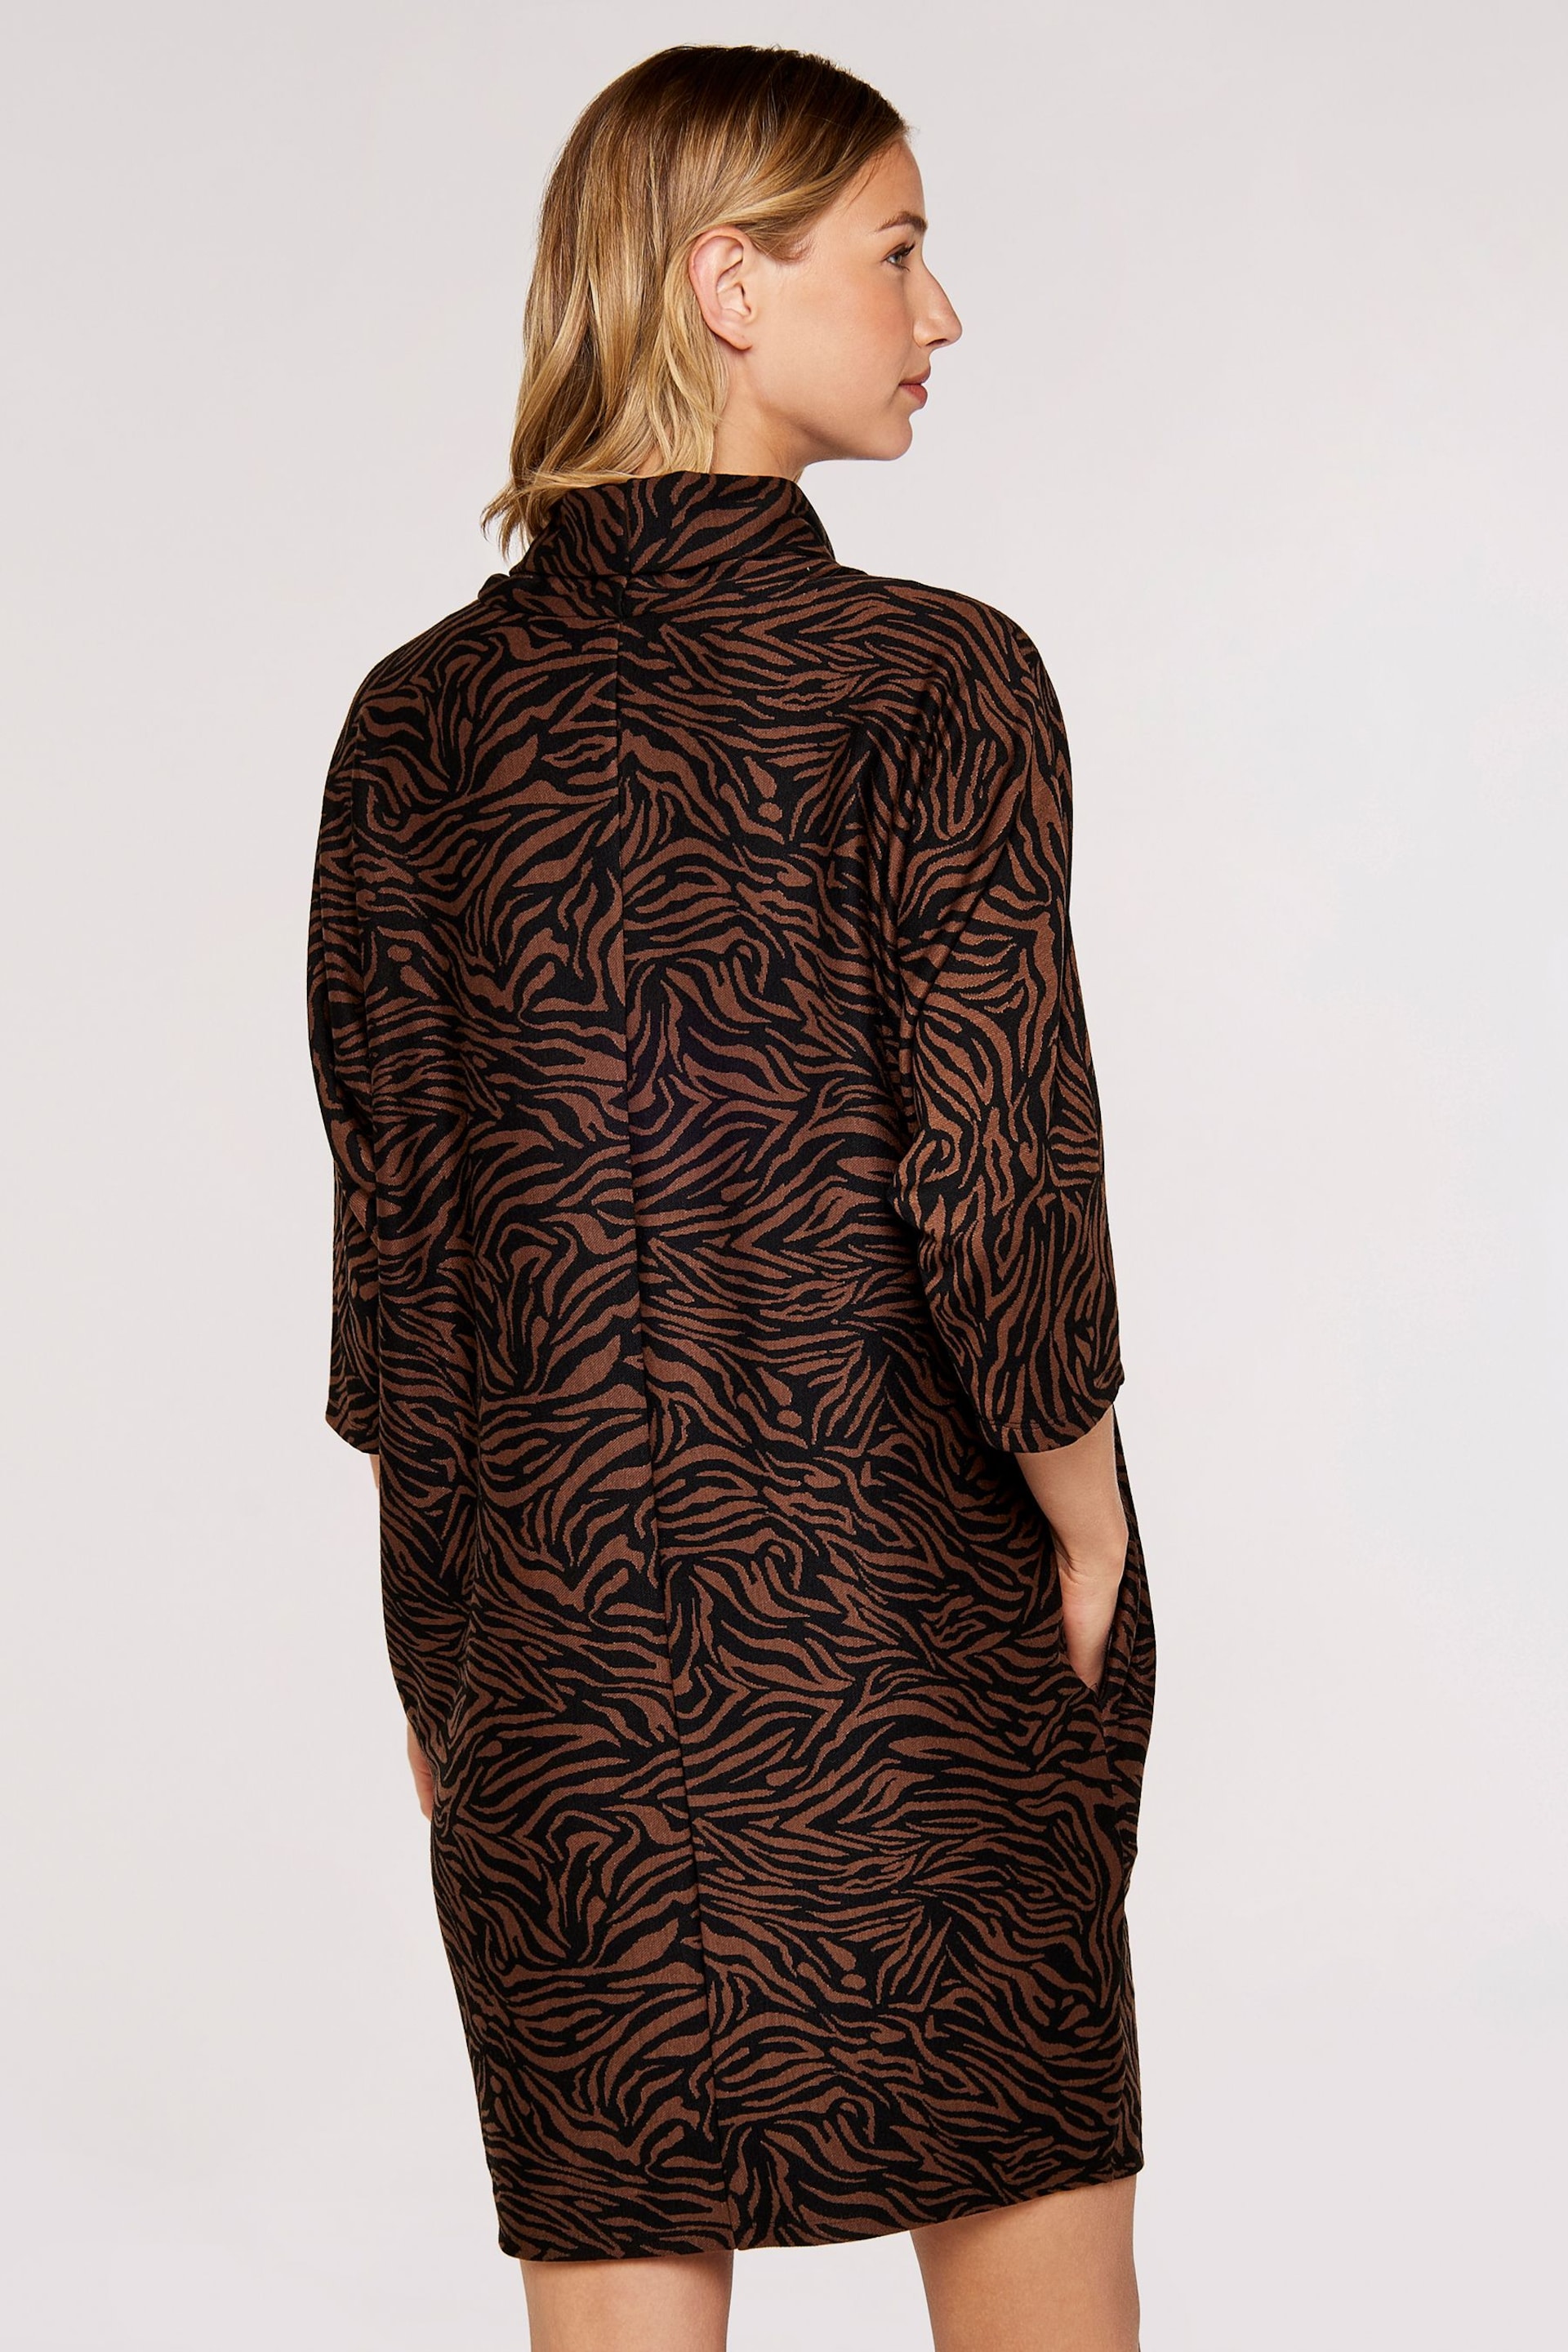 Apricot Brown & Black Zebra Print Cocoon Dress - Image 2 of 4